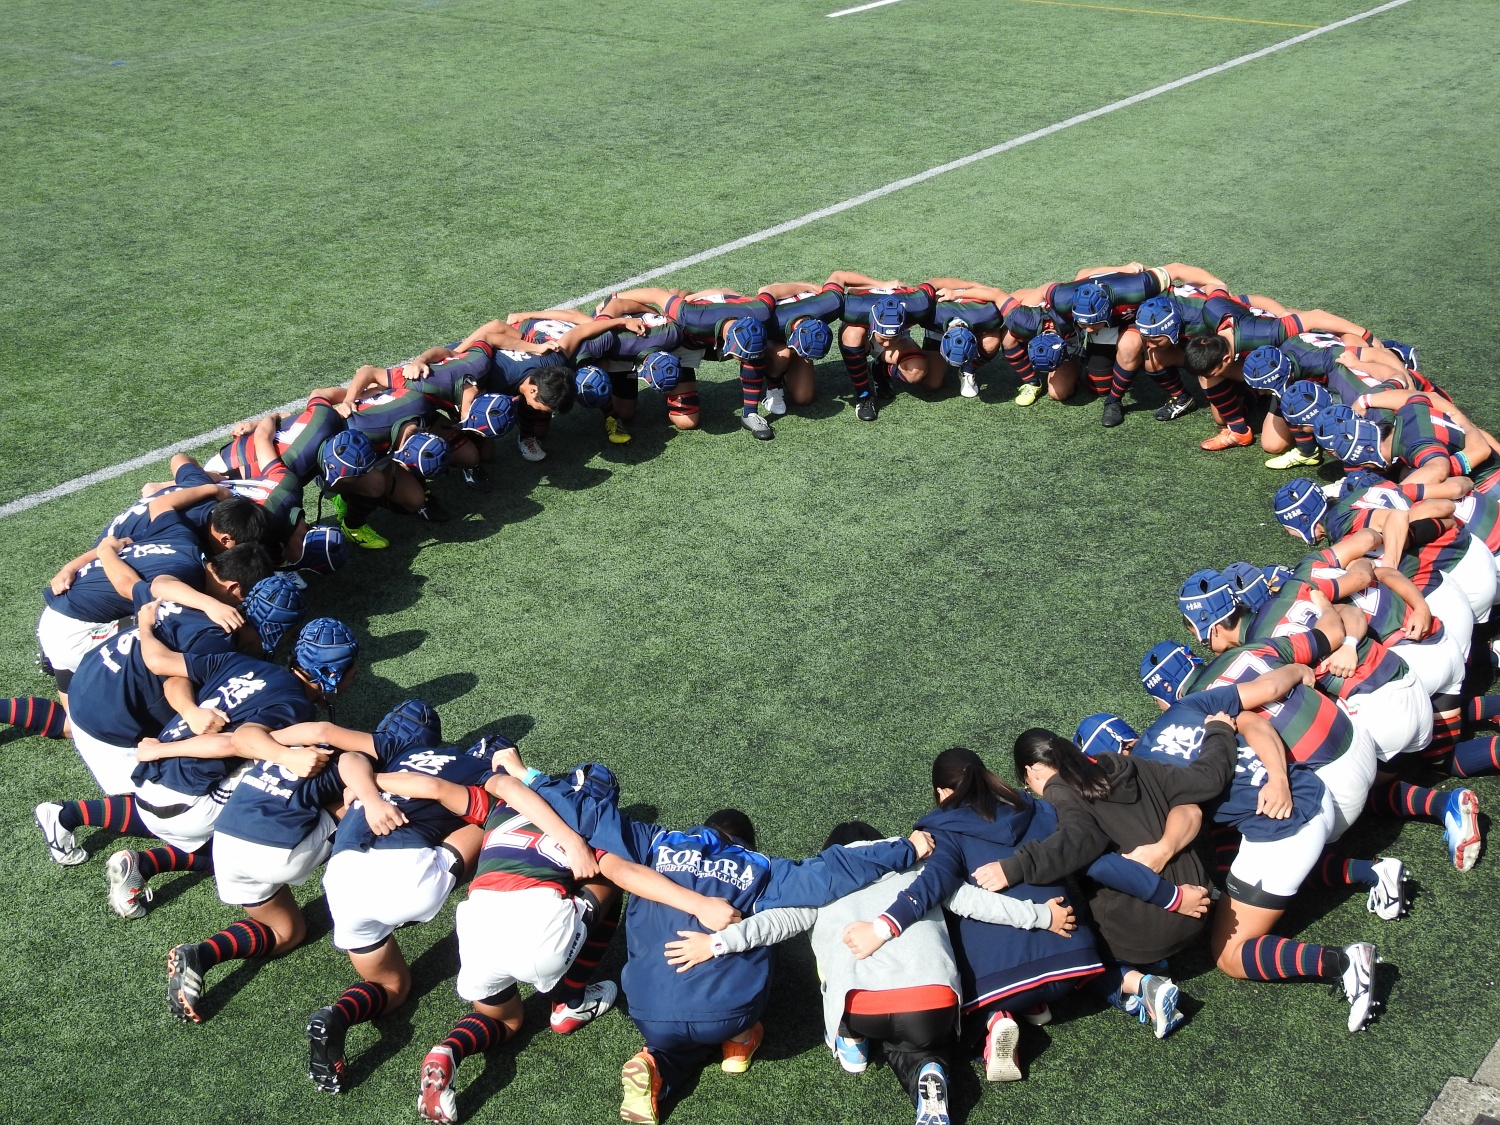 http://kokura-rugby.sakura.ne.jp/DSCN7993_xlarge.JPG